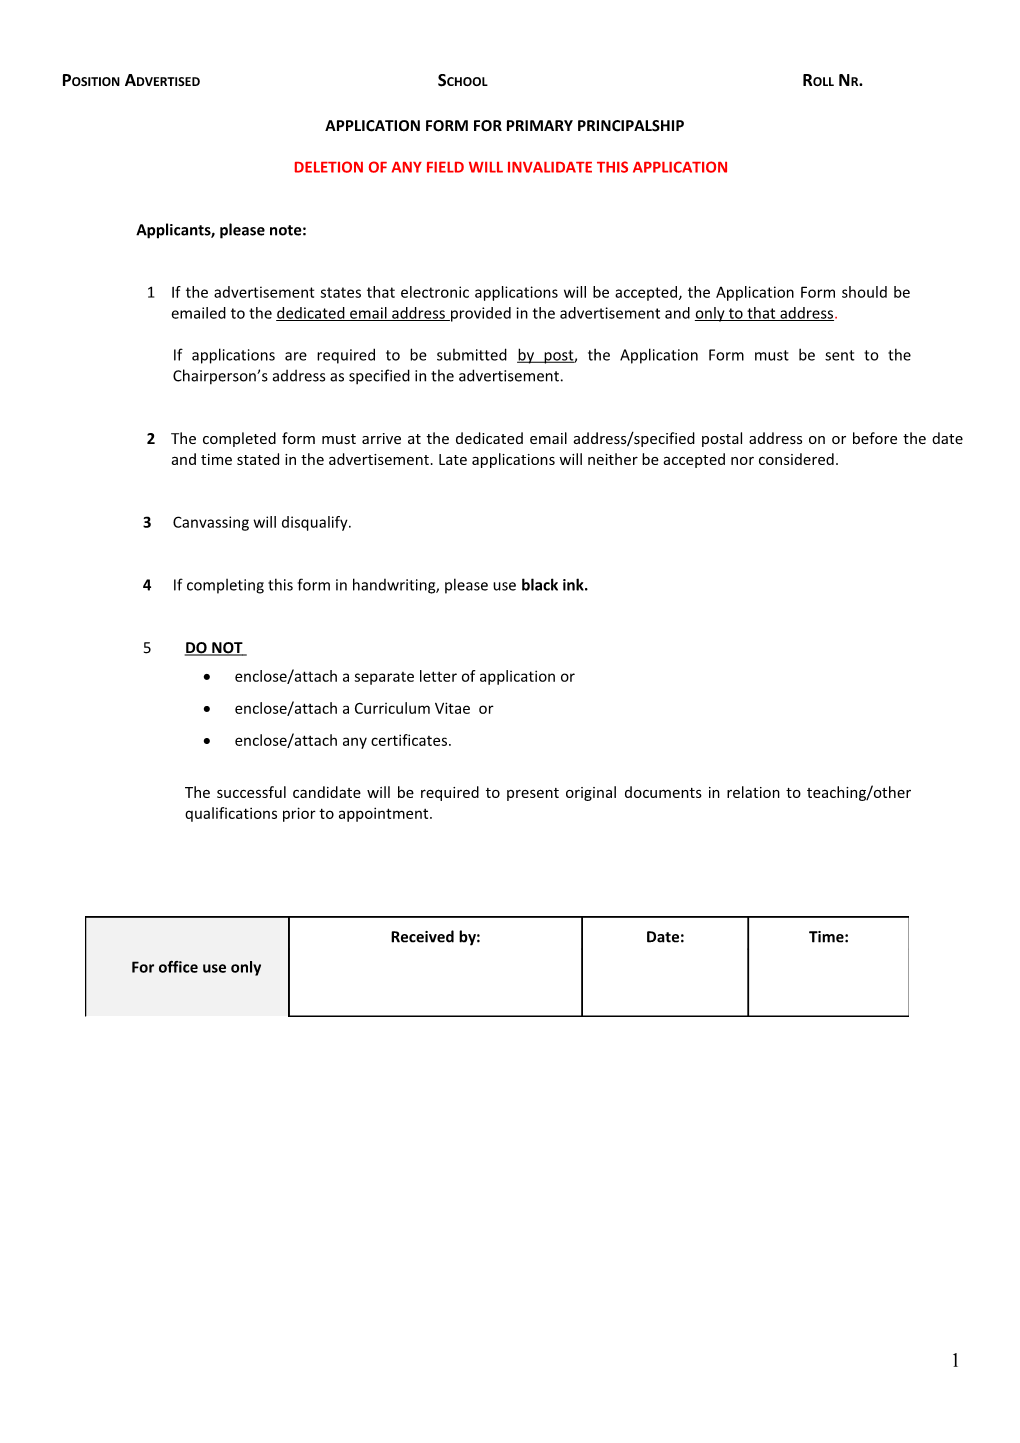 Application Form for Primary Principalship